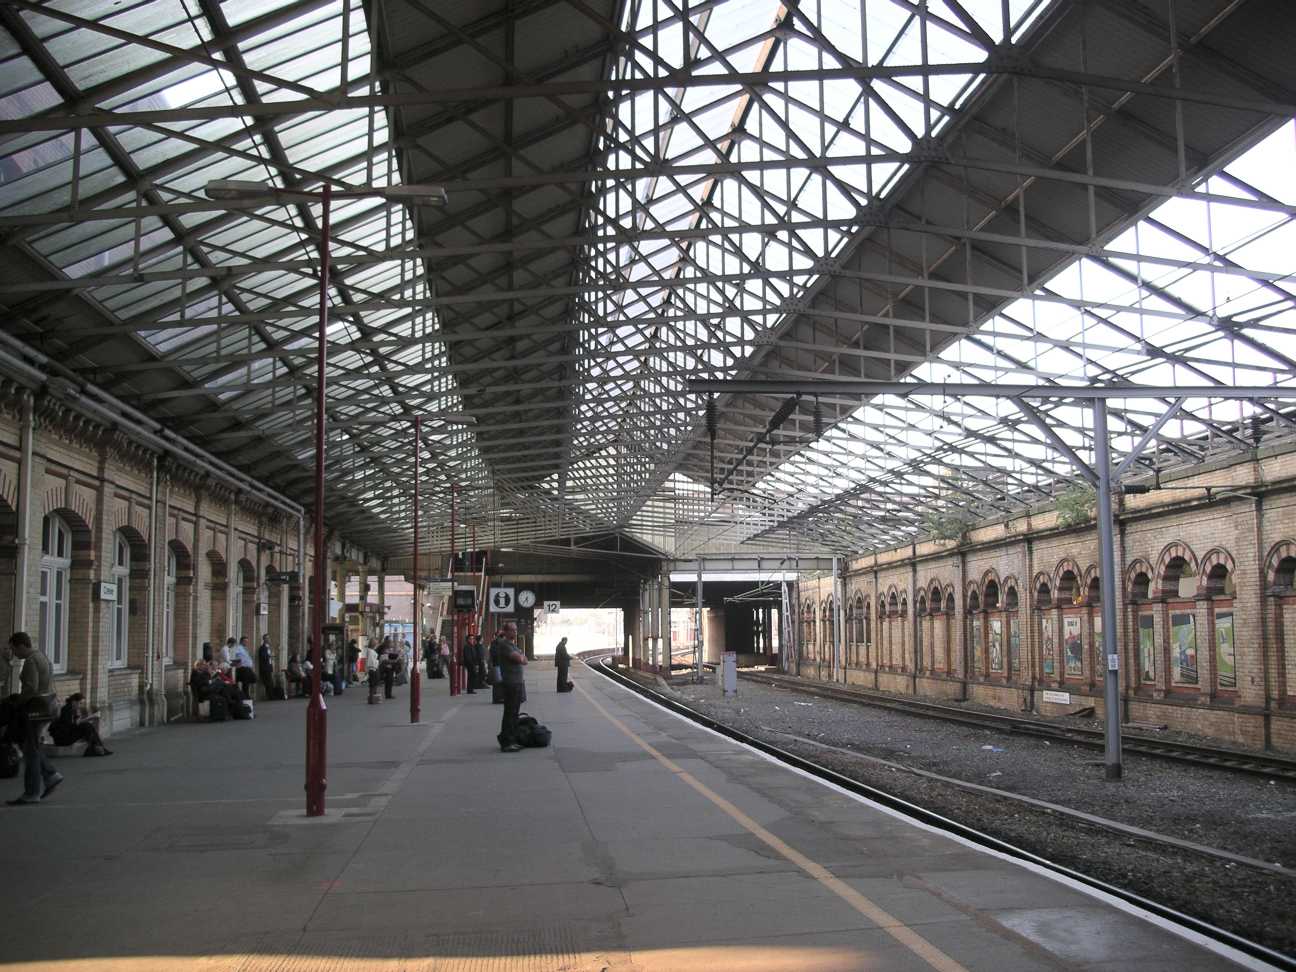 File:Crewe station platform12.jpg - Wikipedia